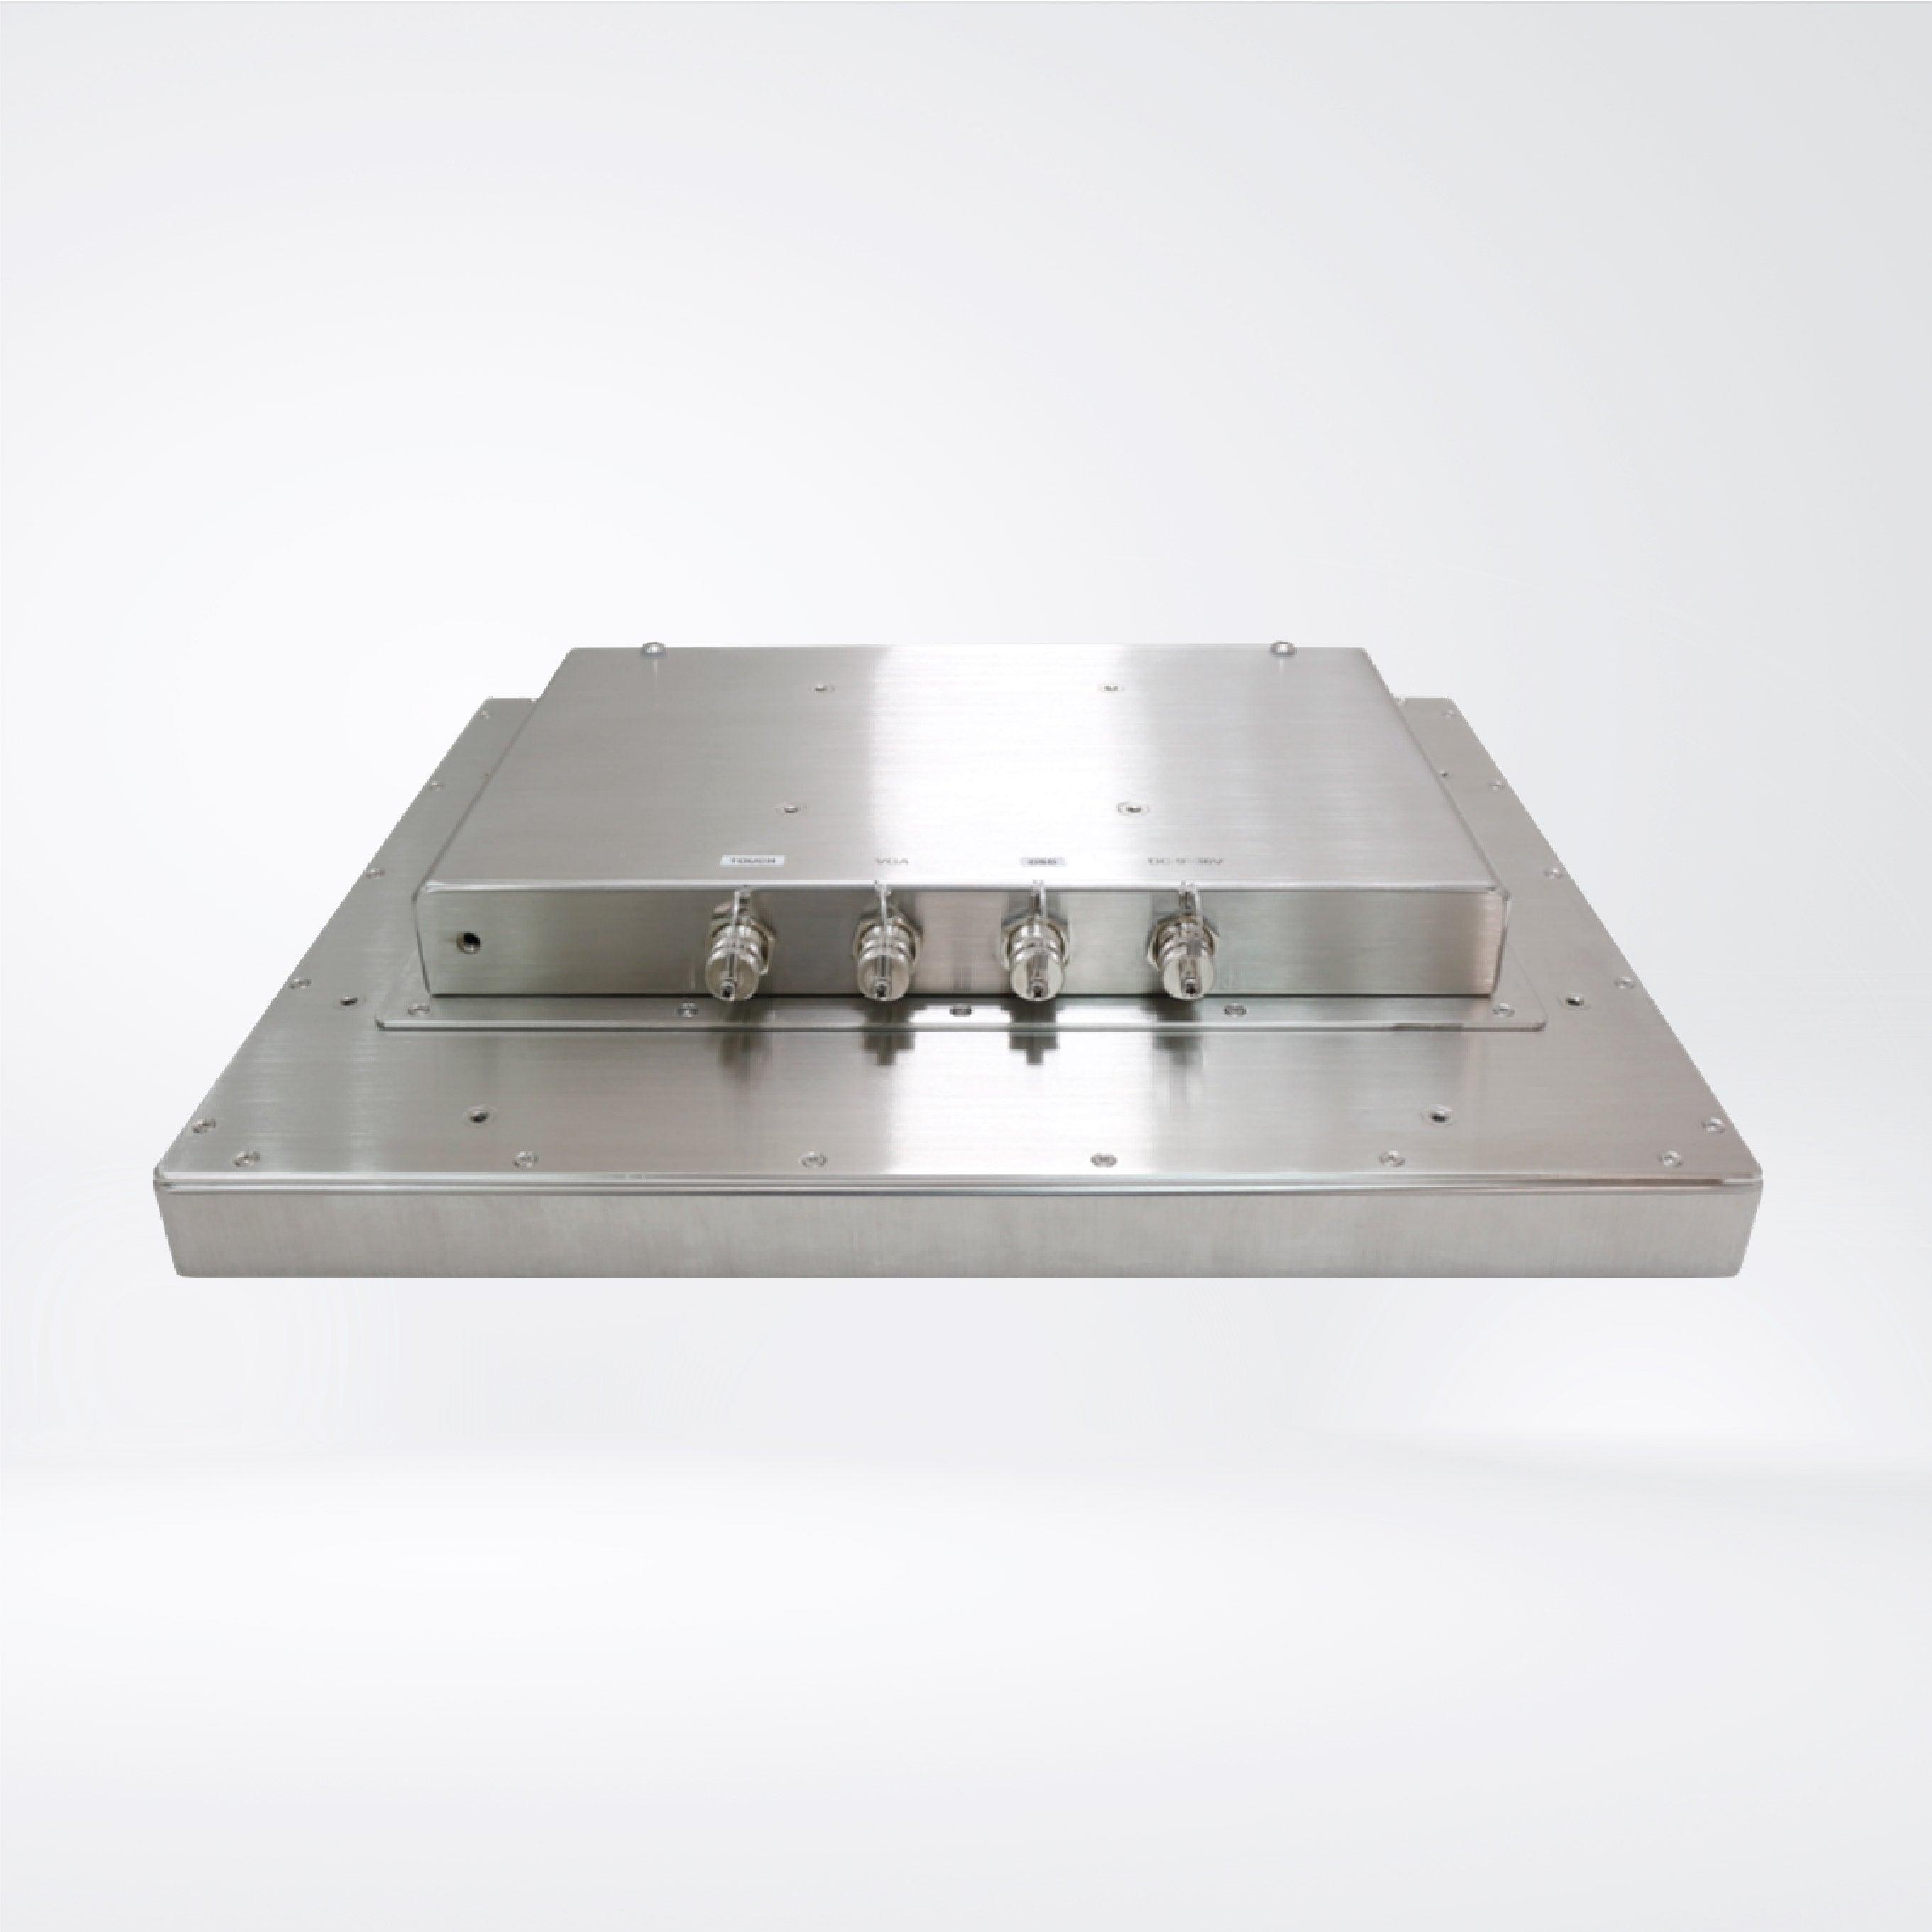 AEx-115PH 15” ATEX Certified Stainless Steel Display, Luminance : 450 (cd/m²) - Riverplus